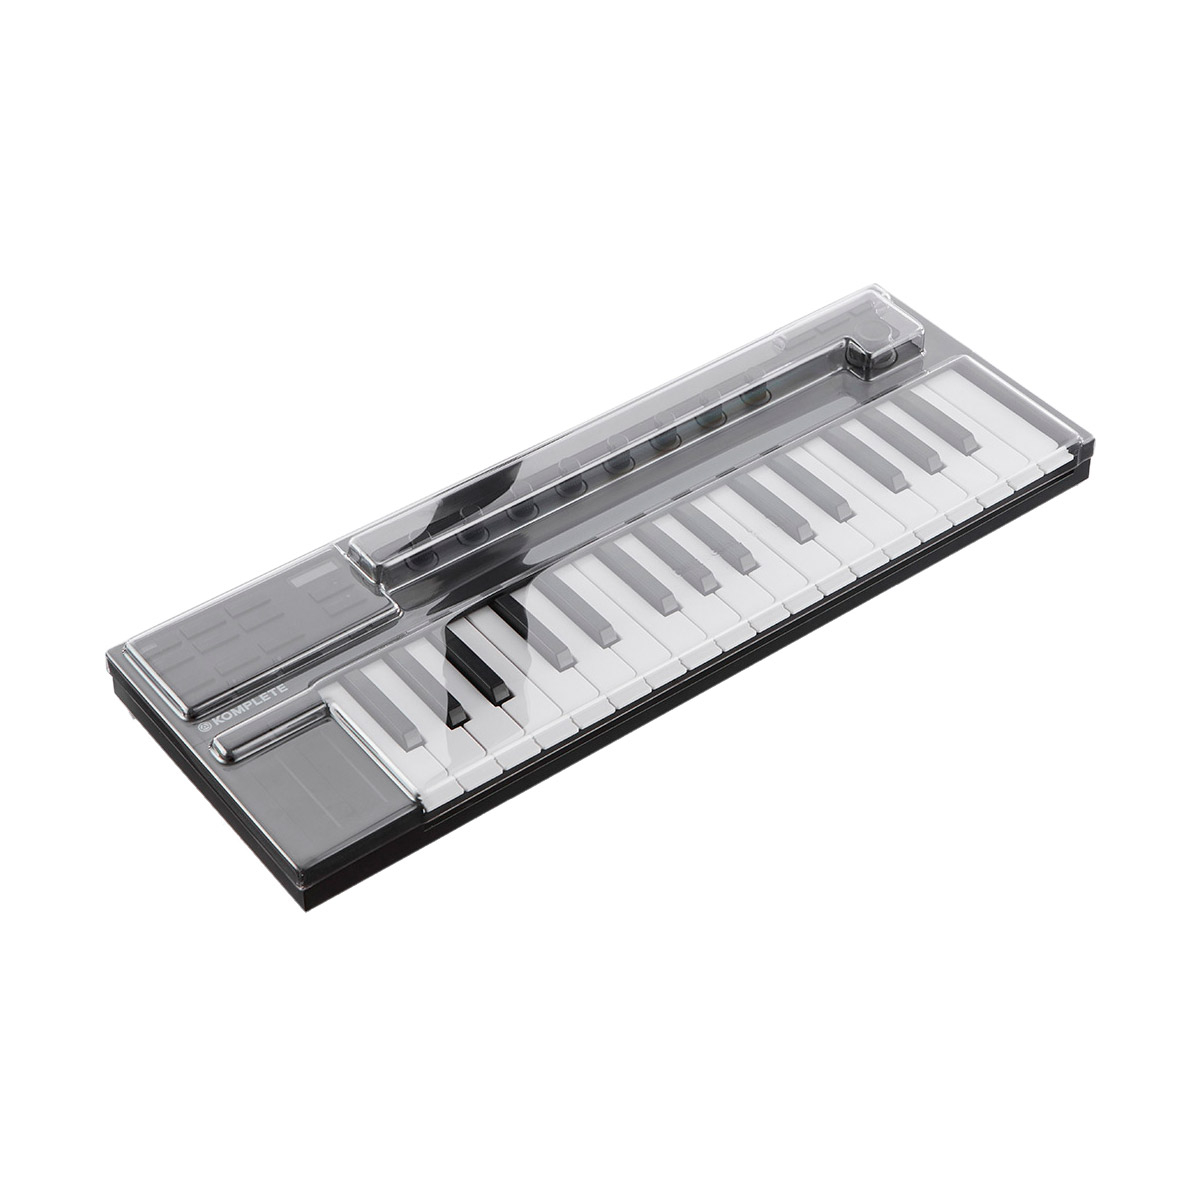 native instruments komplete kontrol m32 compact keyboard controller